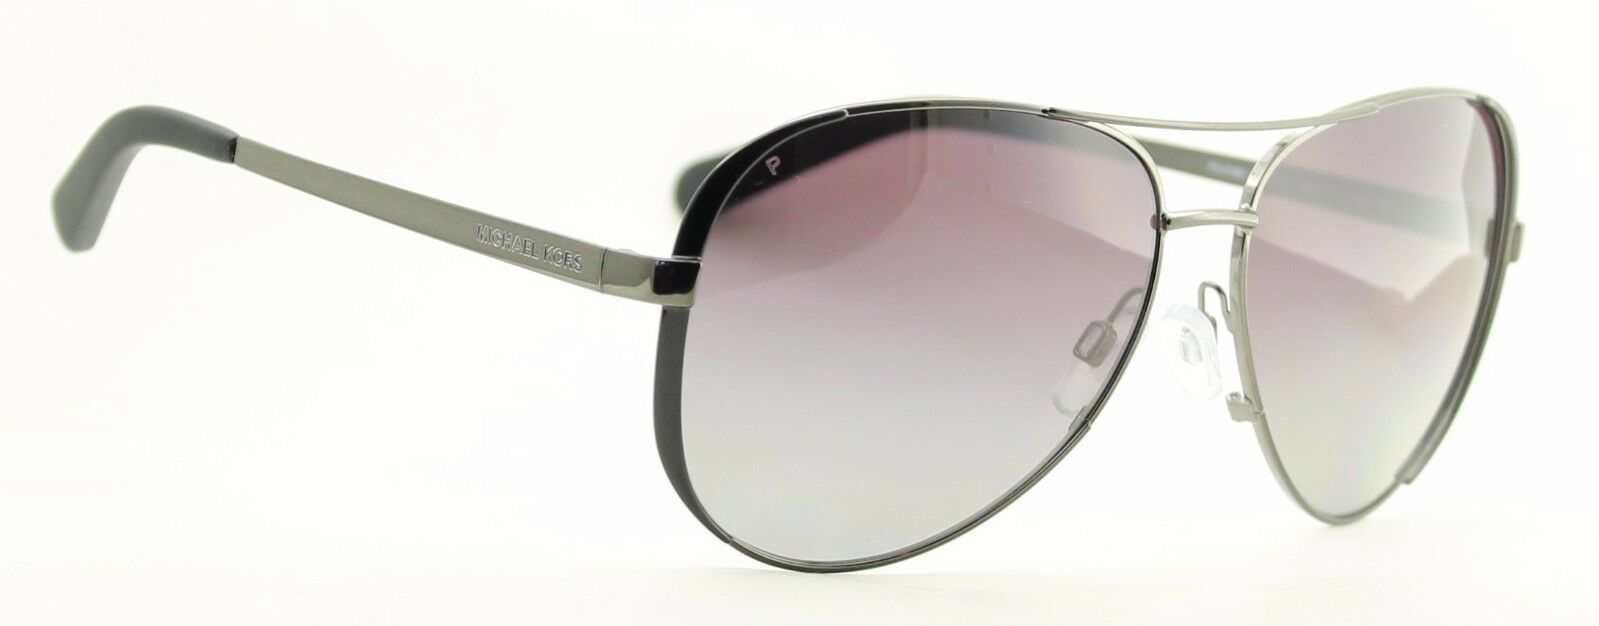 MICHAEL KORS MK5004 Chelsea Aviator Sunglasses Shades Polarized Glasses -  New - GGV Eyewear